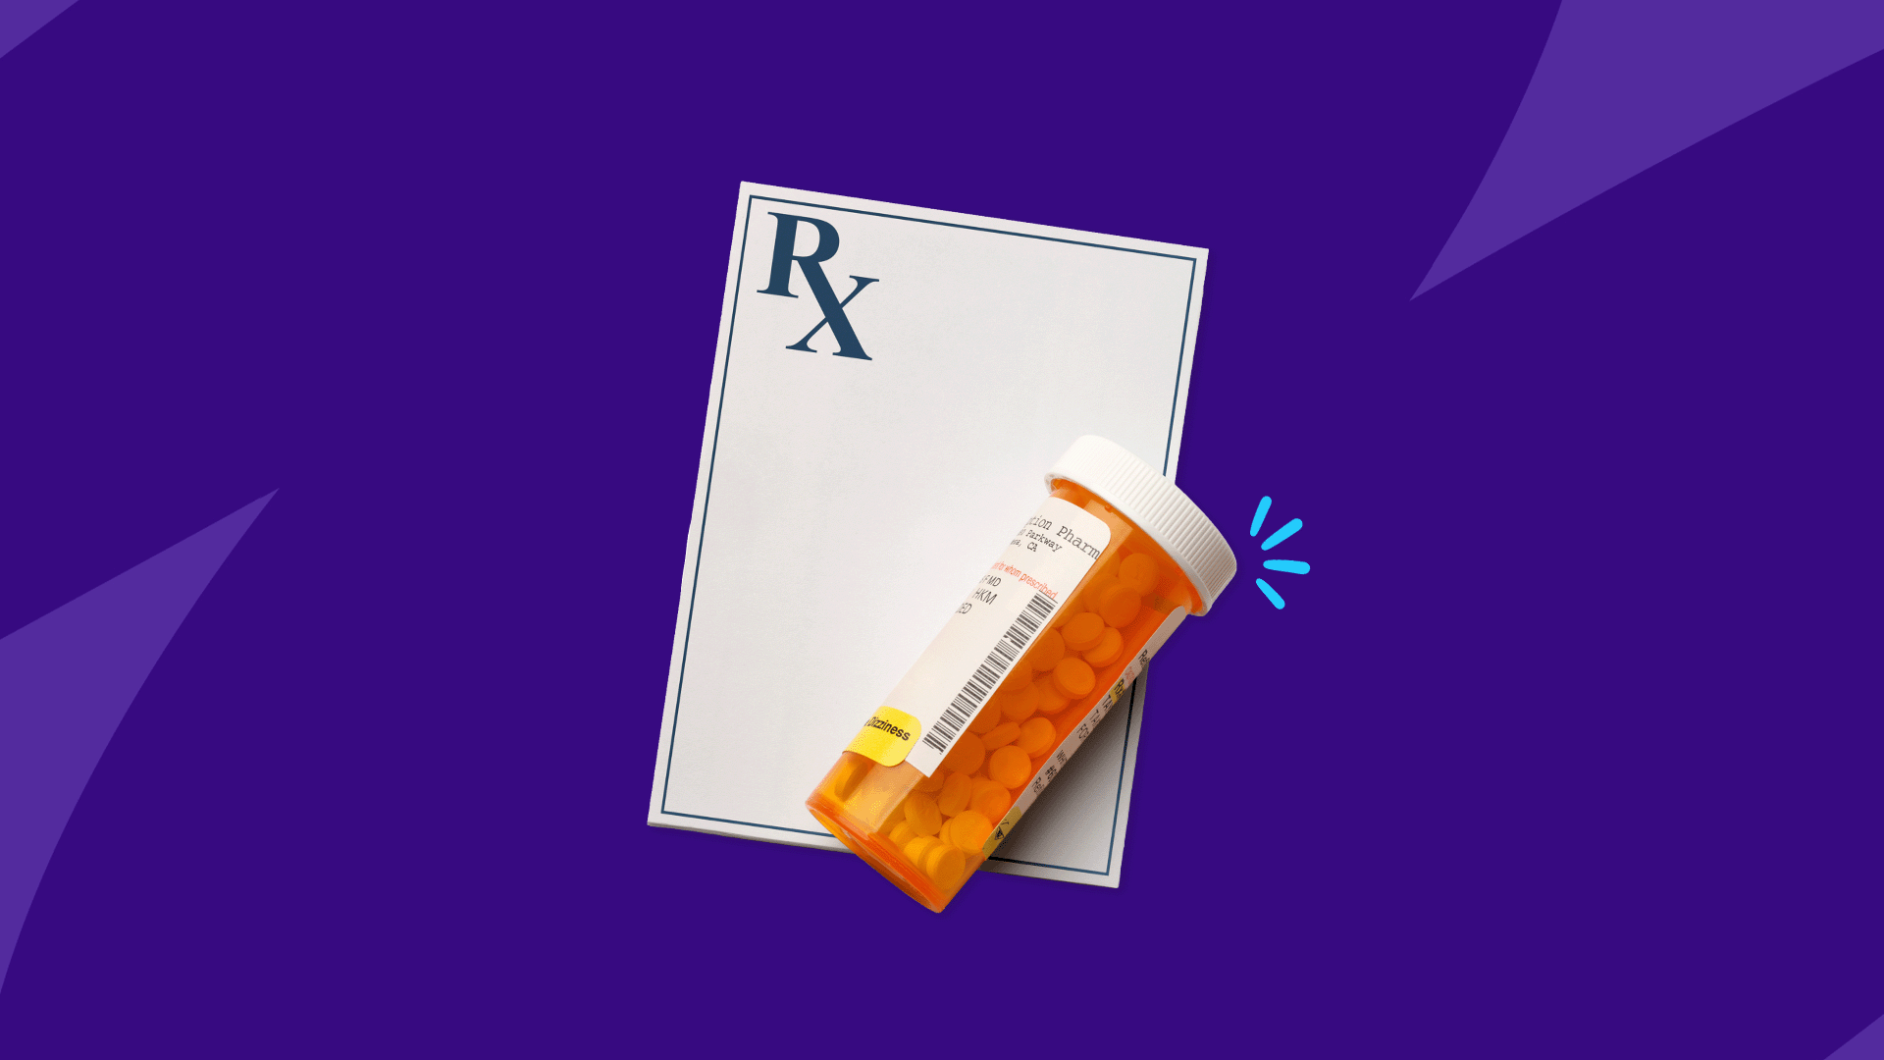 Rx pill bottle and prescription pad: Levocetirizine side effects